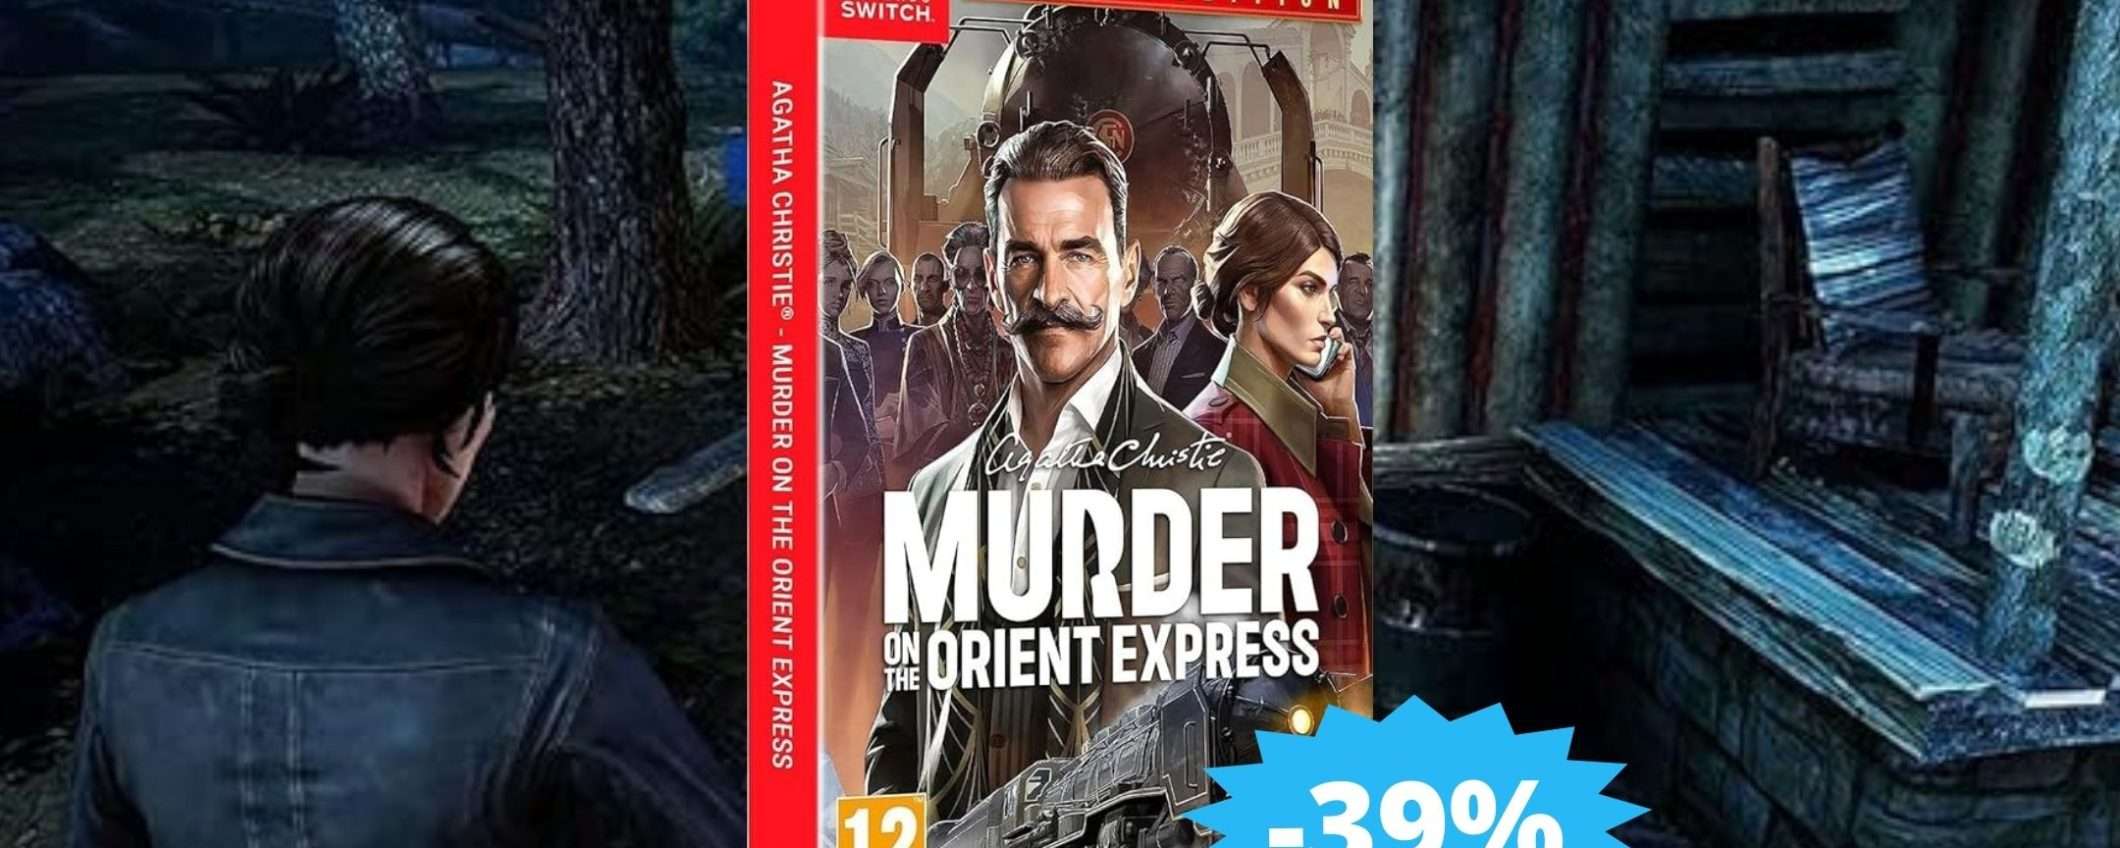 Murder on the Orient Express per Switch: MEGA sconto del 39%